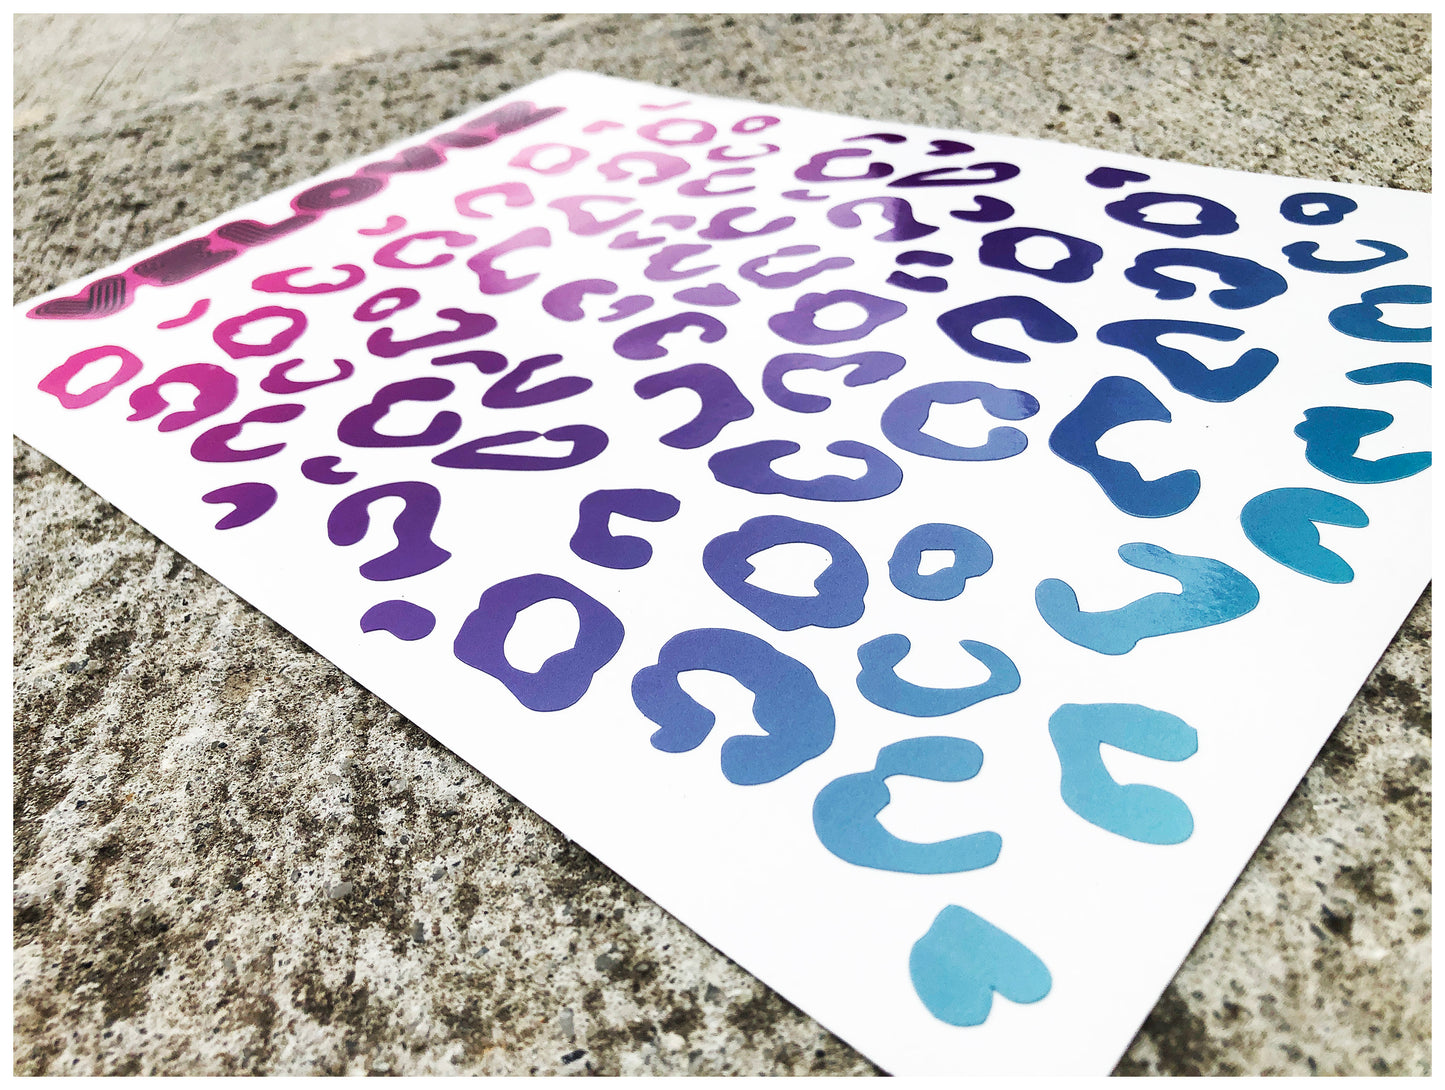 Reflective Leopard Print A4 Cargo Bike Stickers - Blue Pink Fade